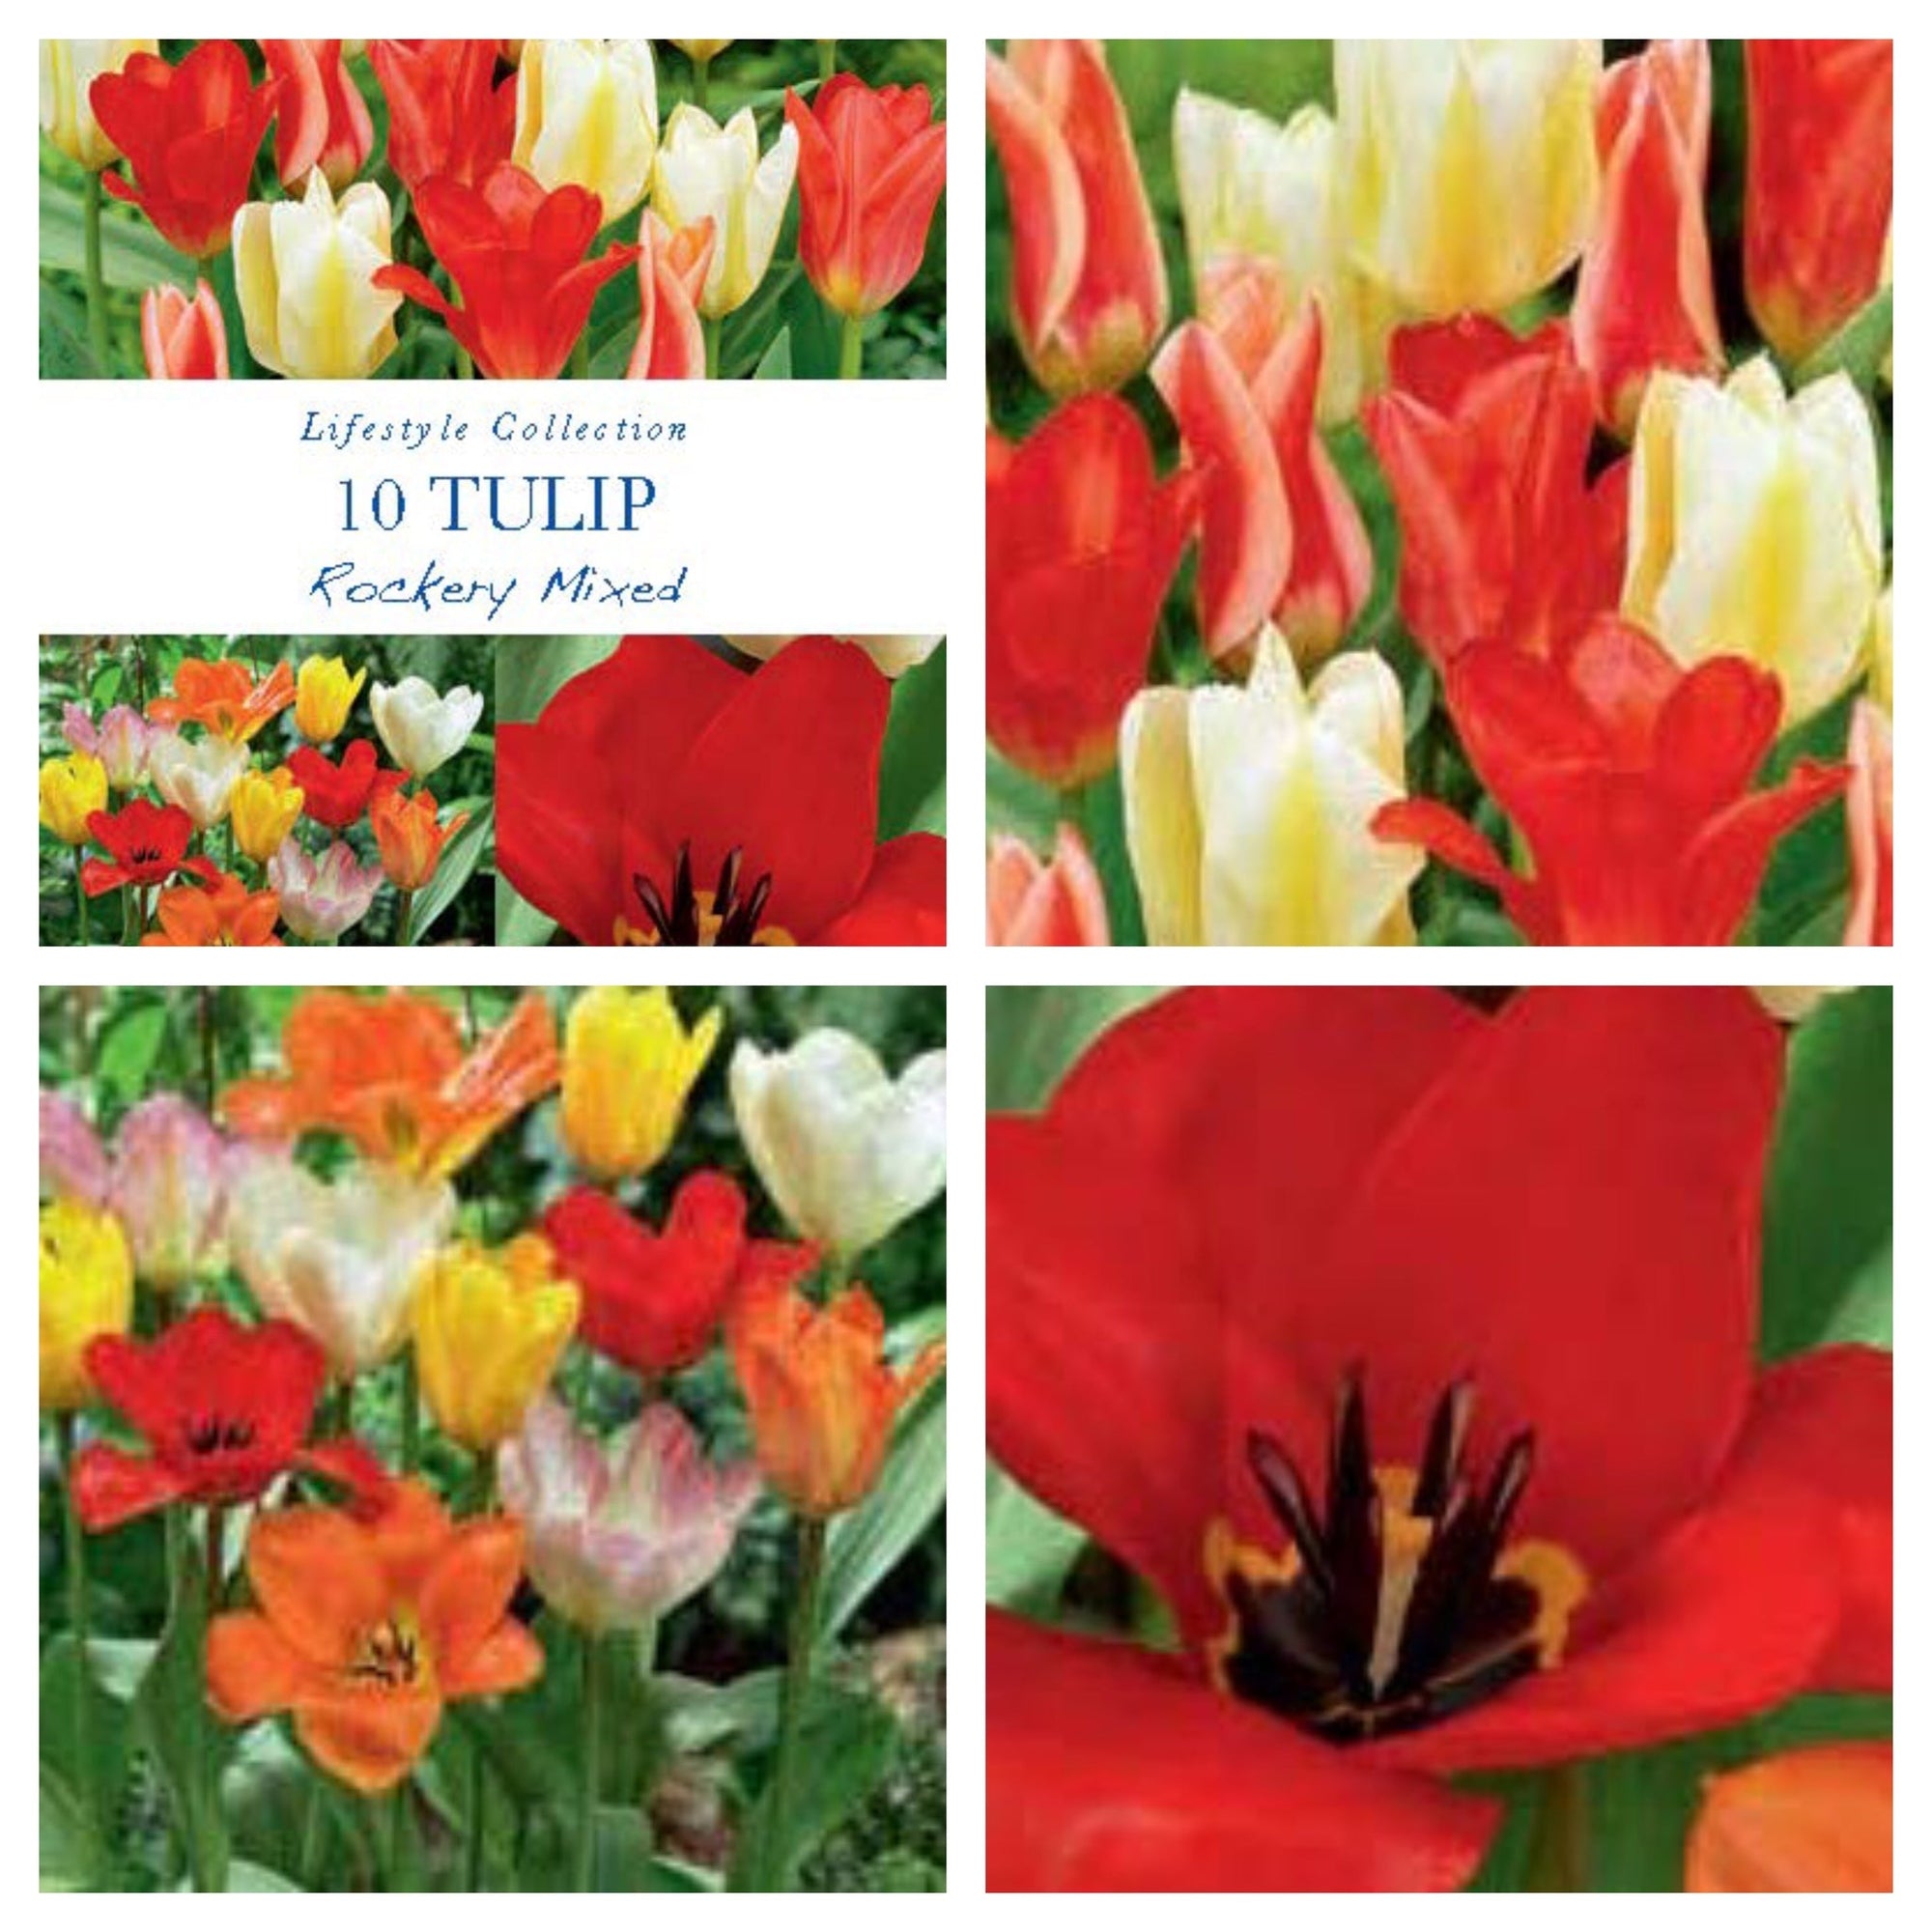 Tulip Dwarf Rockery Mixed Bulbs 16 Bulbs